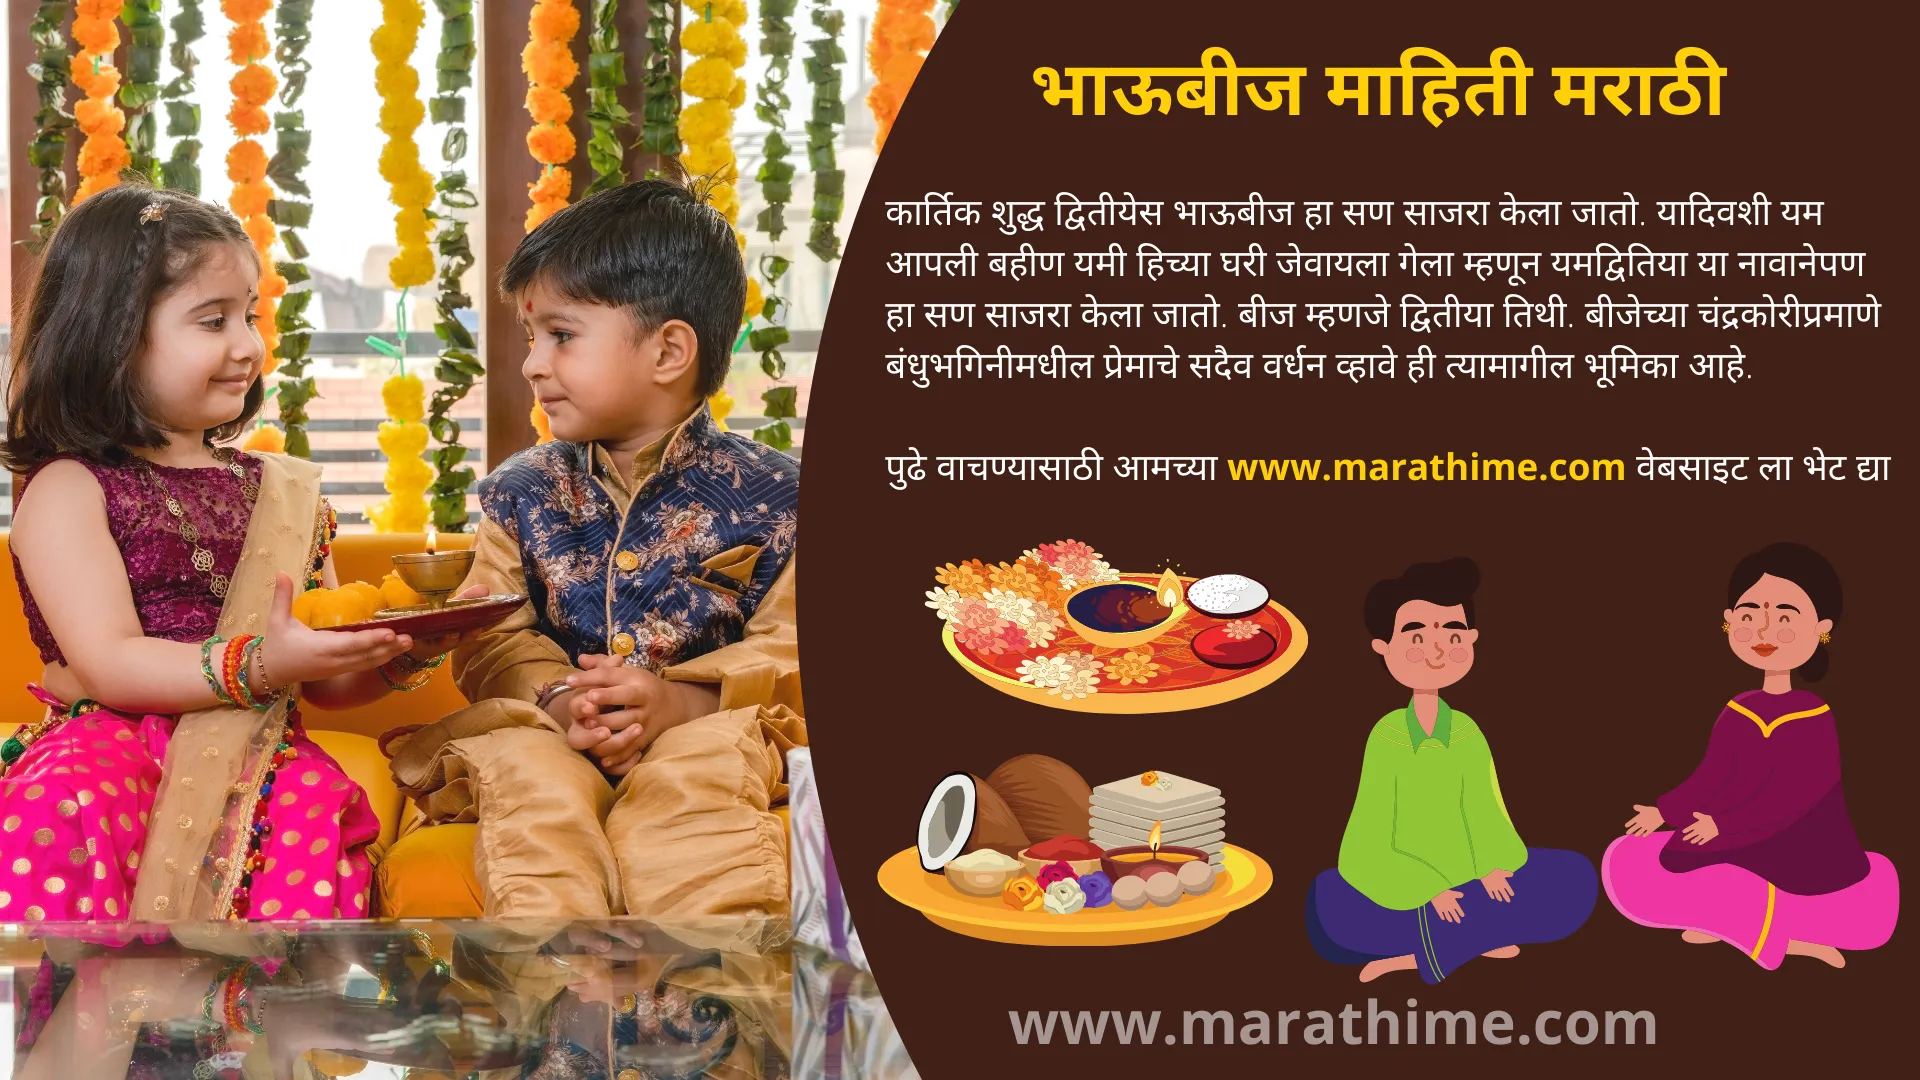 भाऊबीज माहिती मराठी-Bhaubeej Information in Marathi